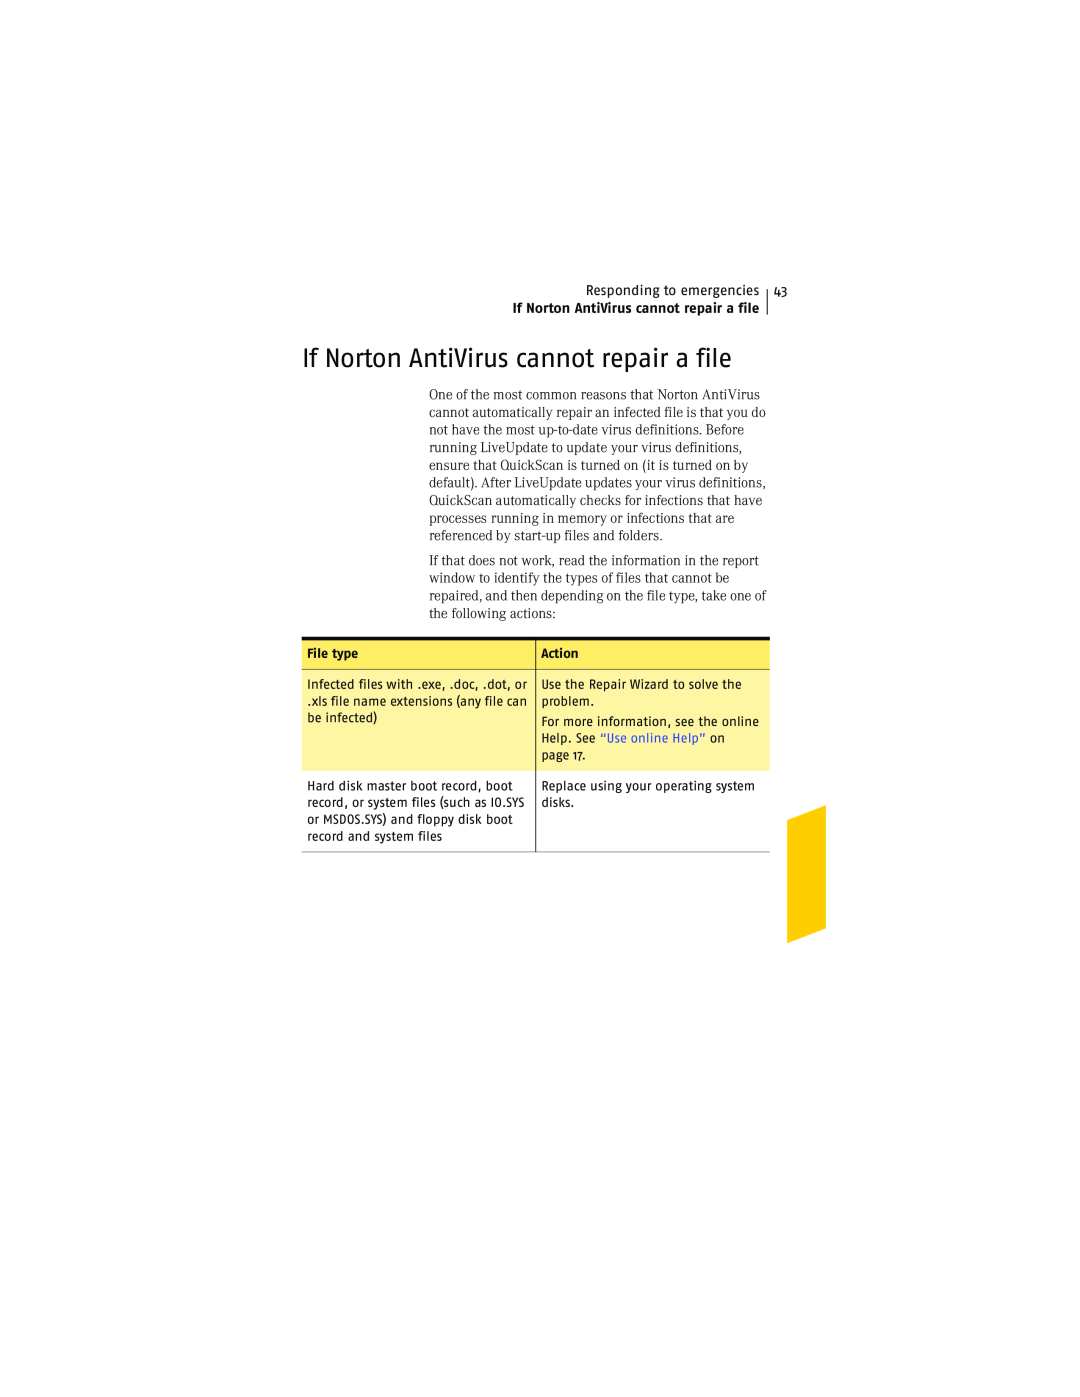 Symantec NIS2005 manual If Norton AntiVirus cannot repair a file, Responding to emergencies, File type, Action 